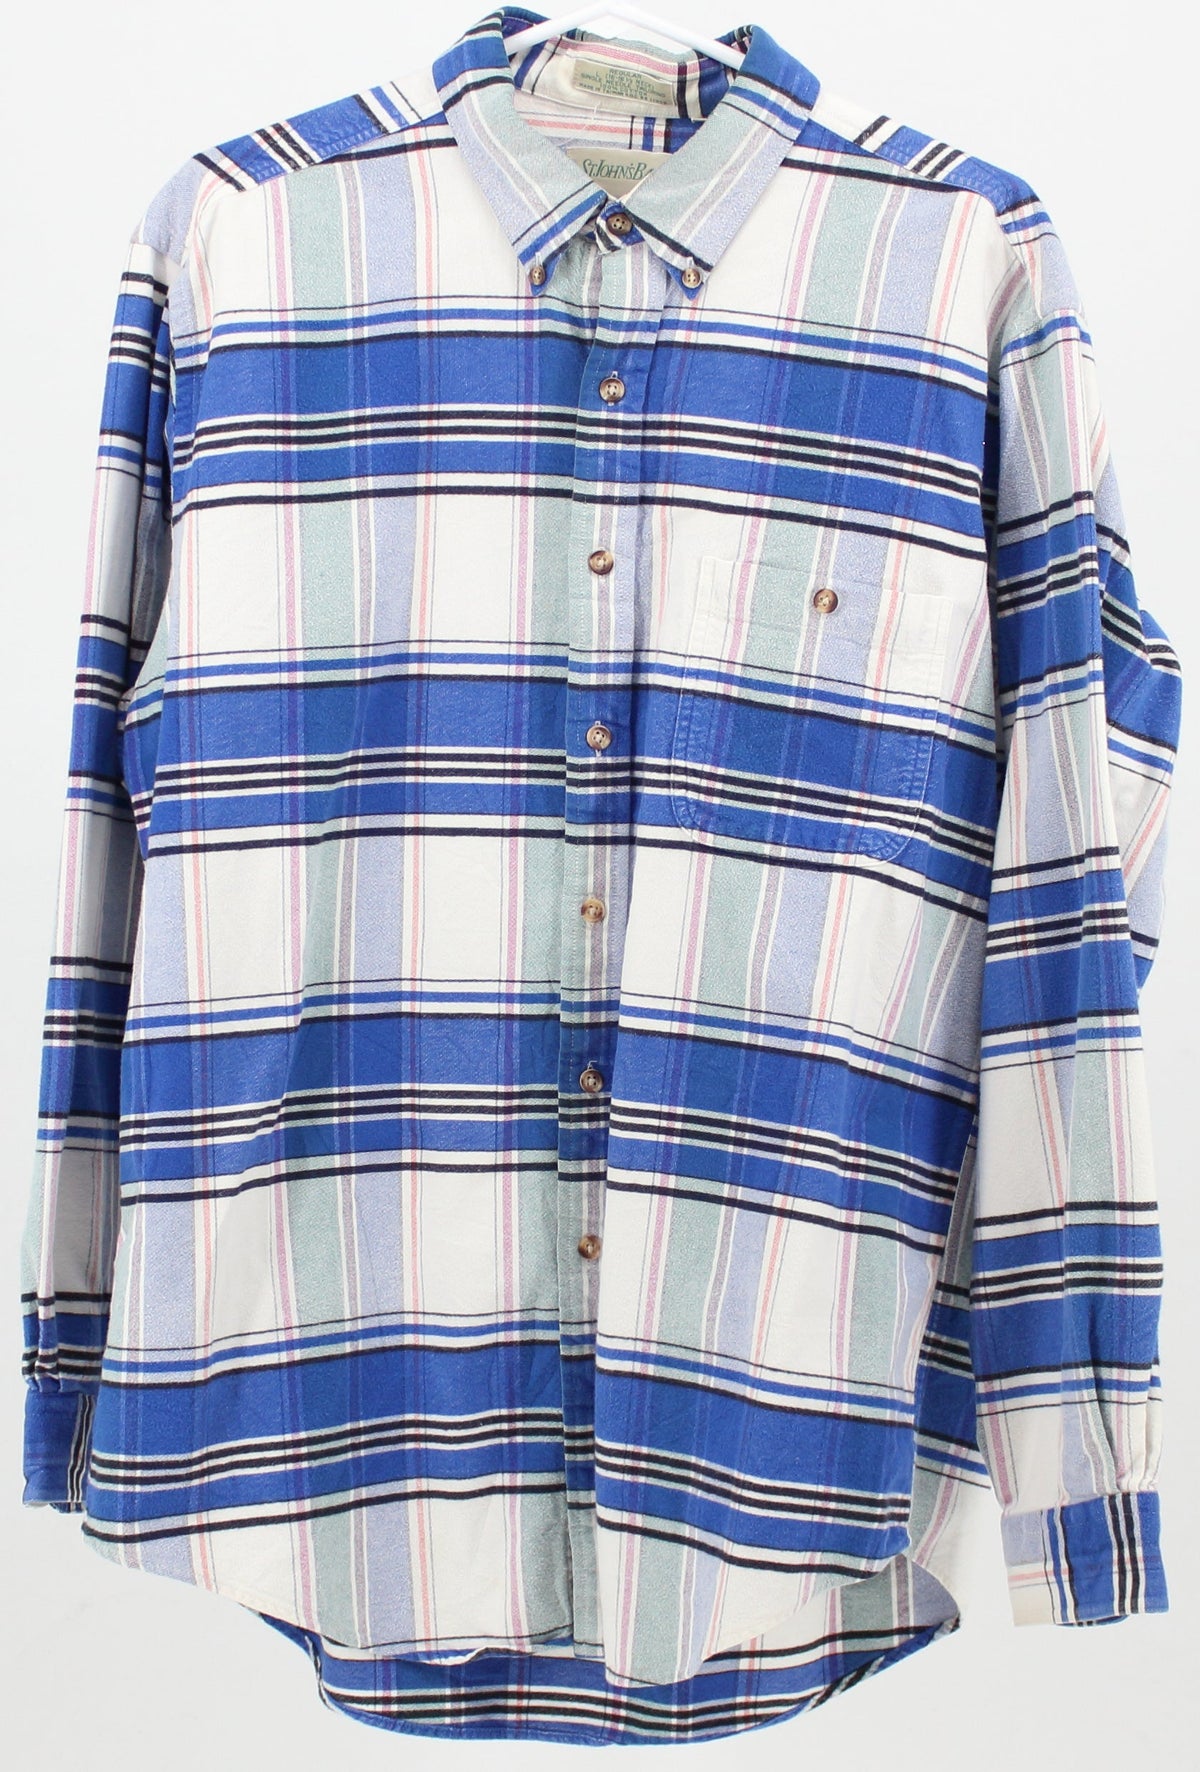 St John's Bay Plaid Flannel Shirt